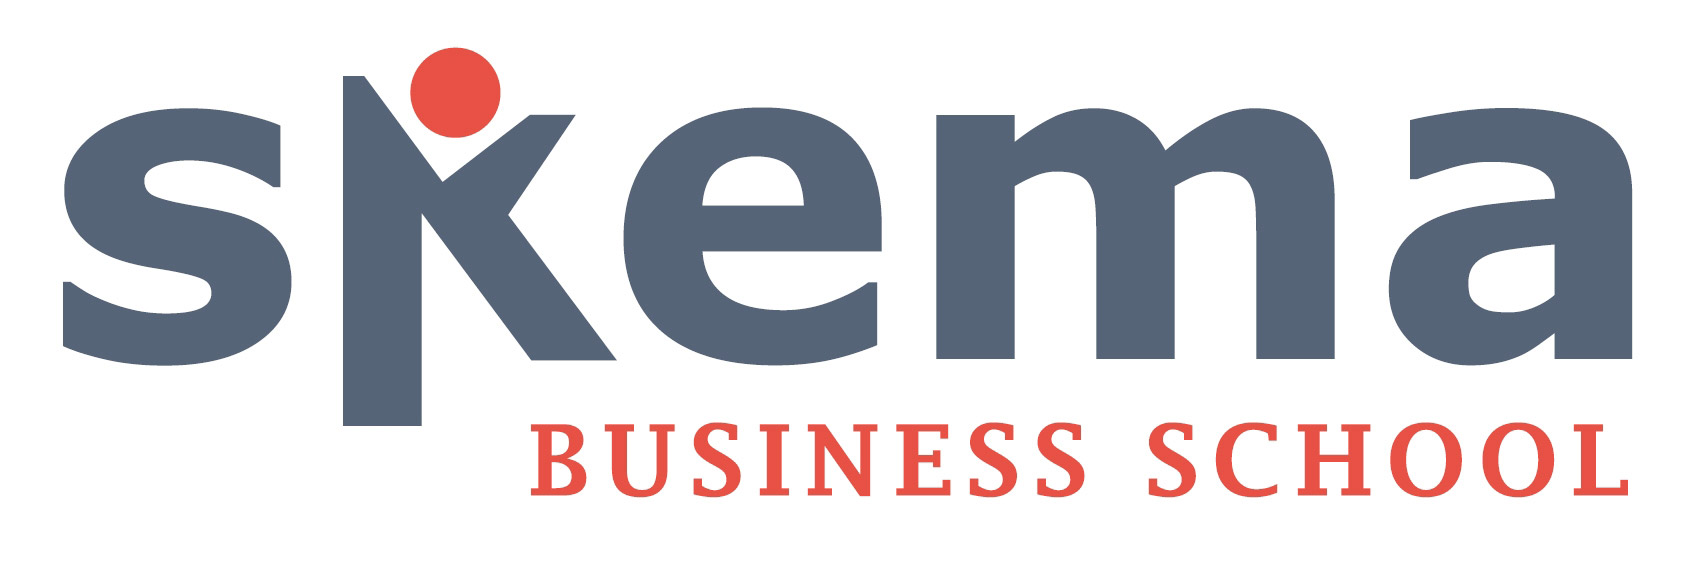 logo_SKEMA Business School